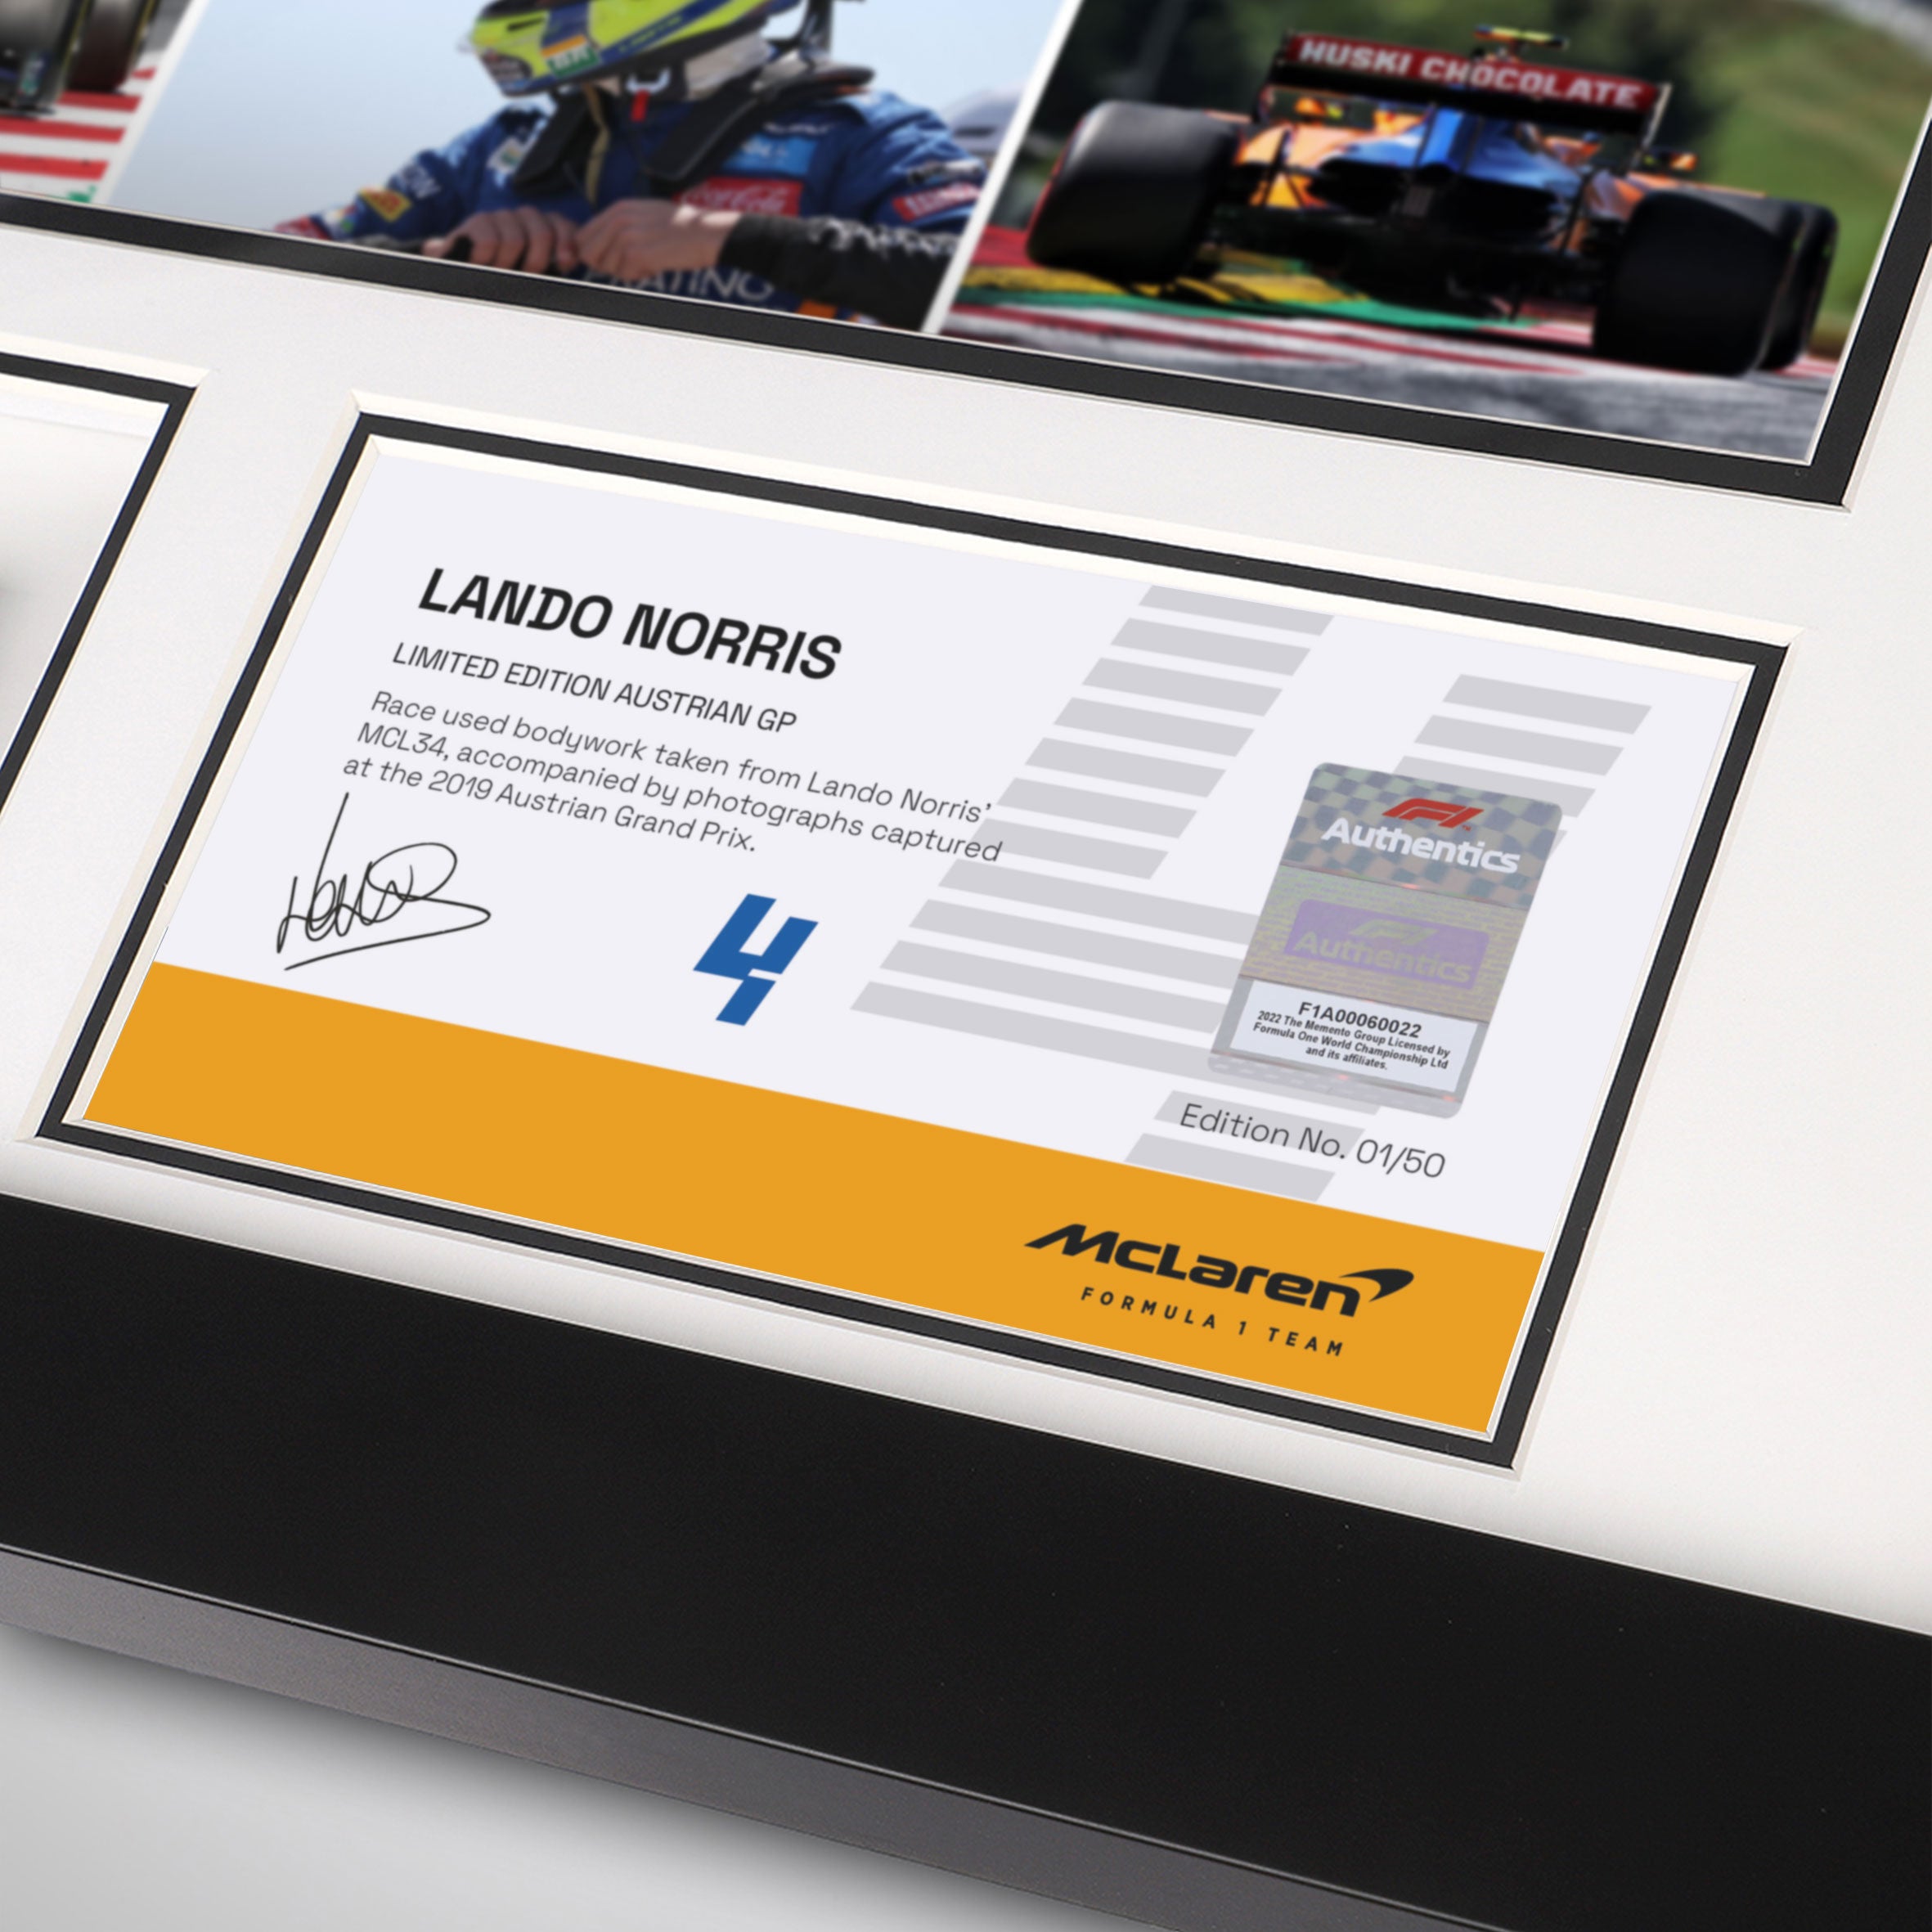 Limited Edition Lando Norris 2019 Bodywork & Photo Collage – Austrian GP